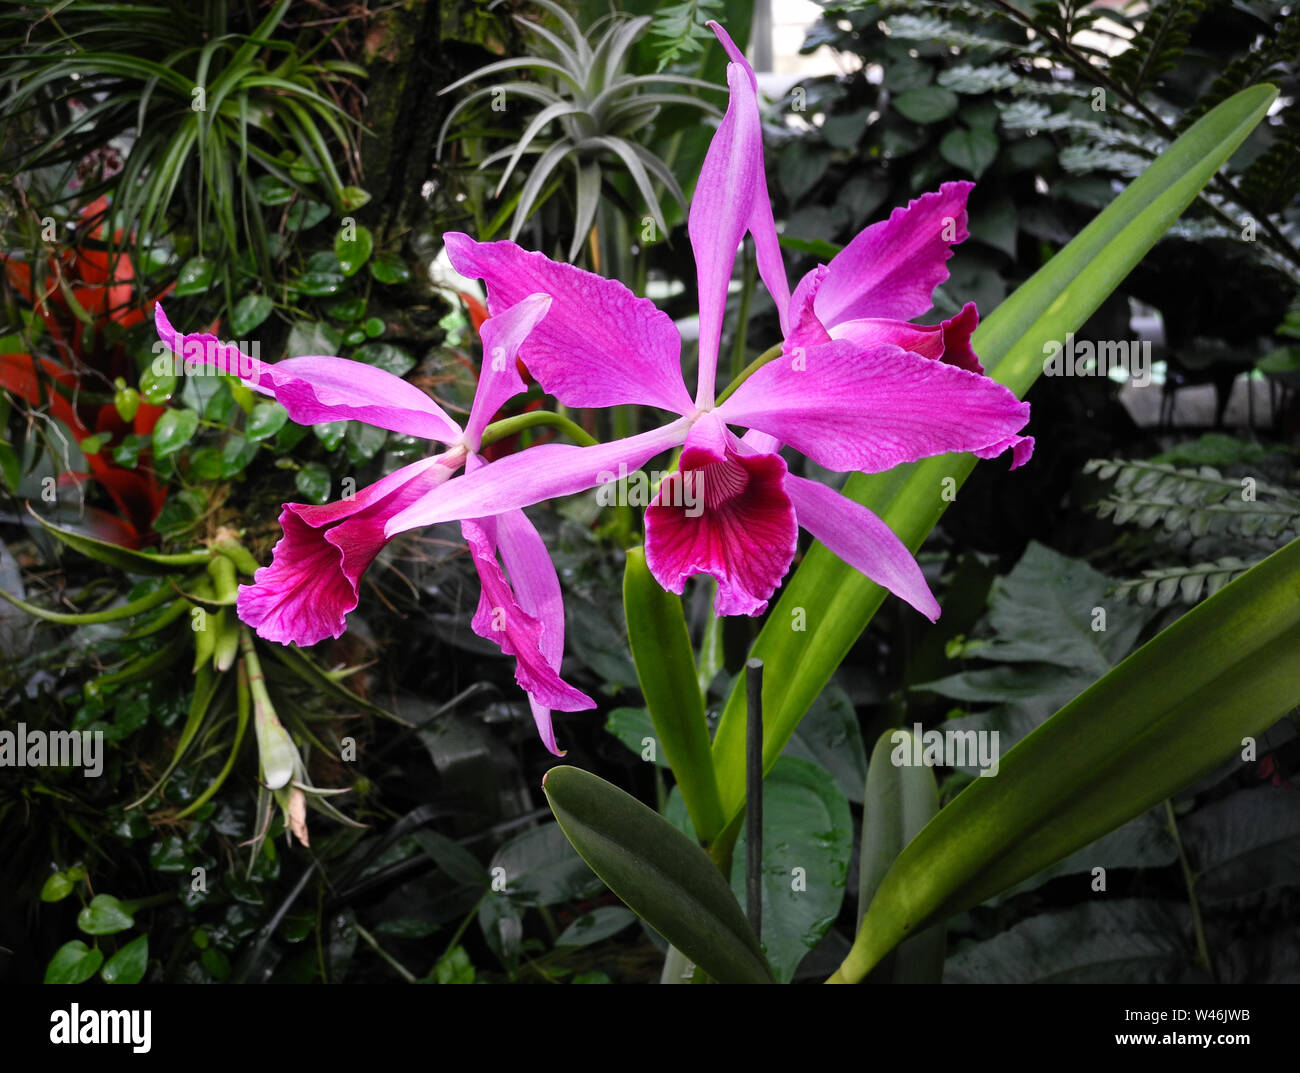 Cattleya labiata orchid fiori in un giardino botanico in Polonia Foto Stock